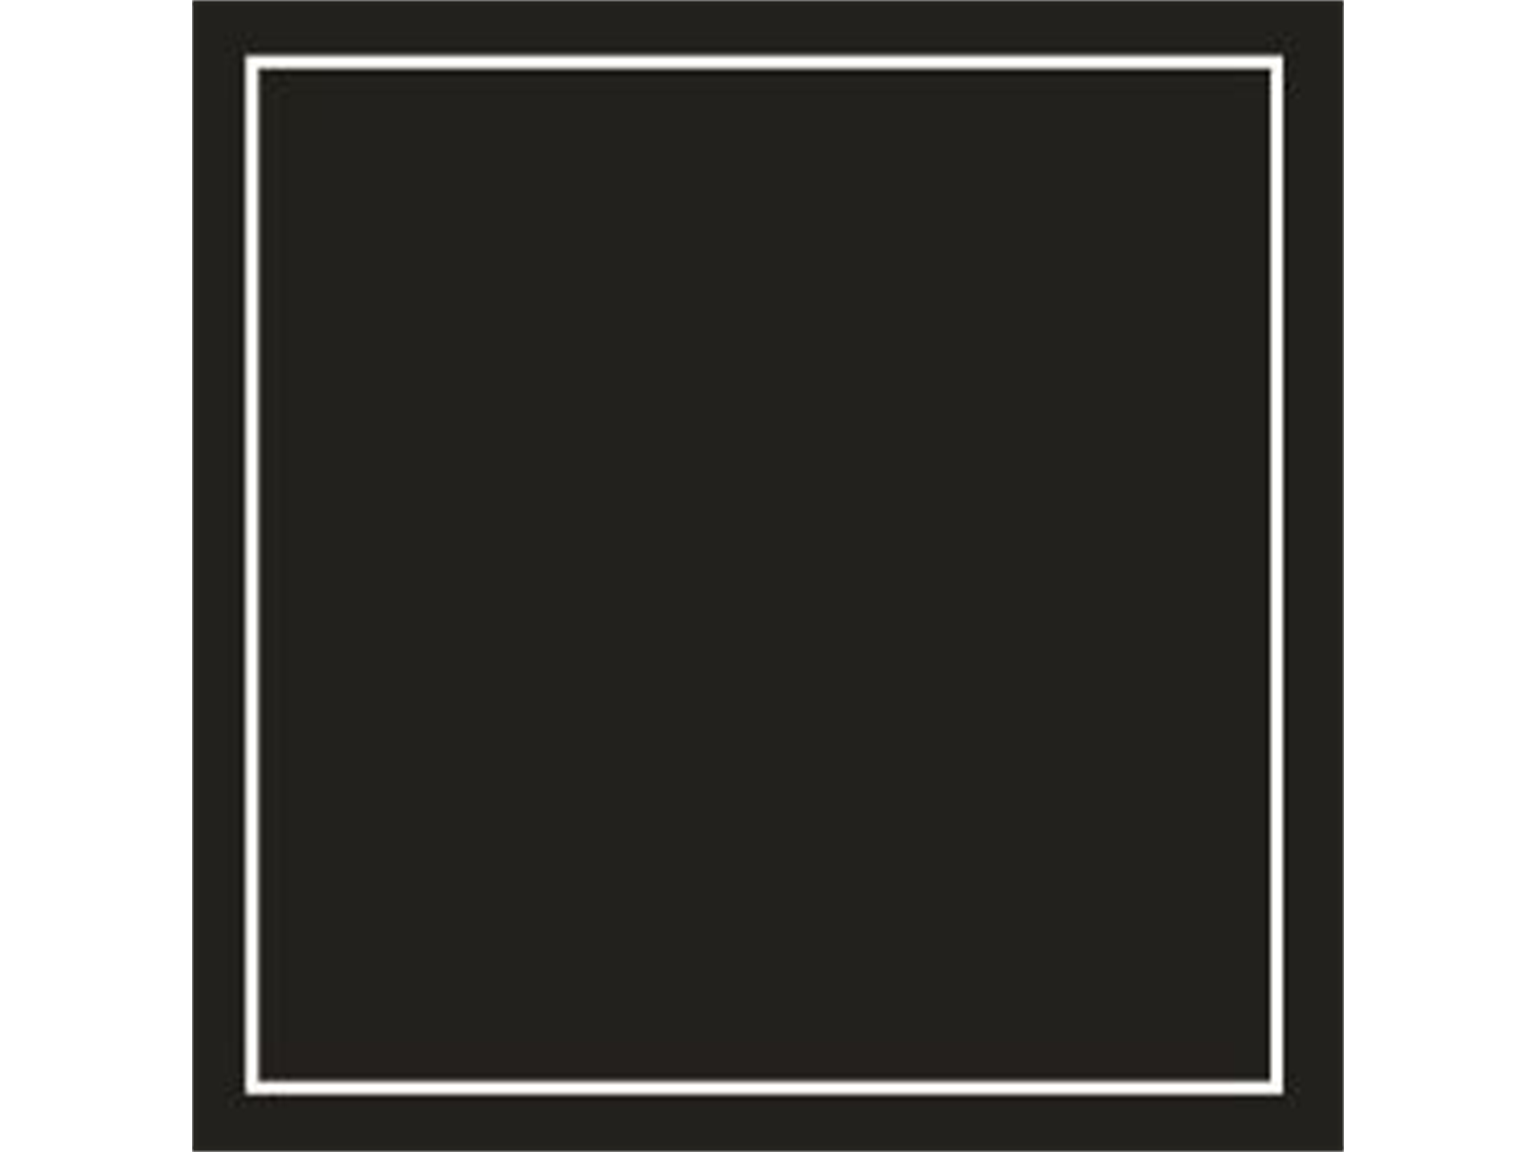 TASSENUNTERSETZER UNI  95 x 95 mm, 9-lagig, schwarz